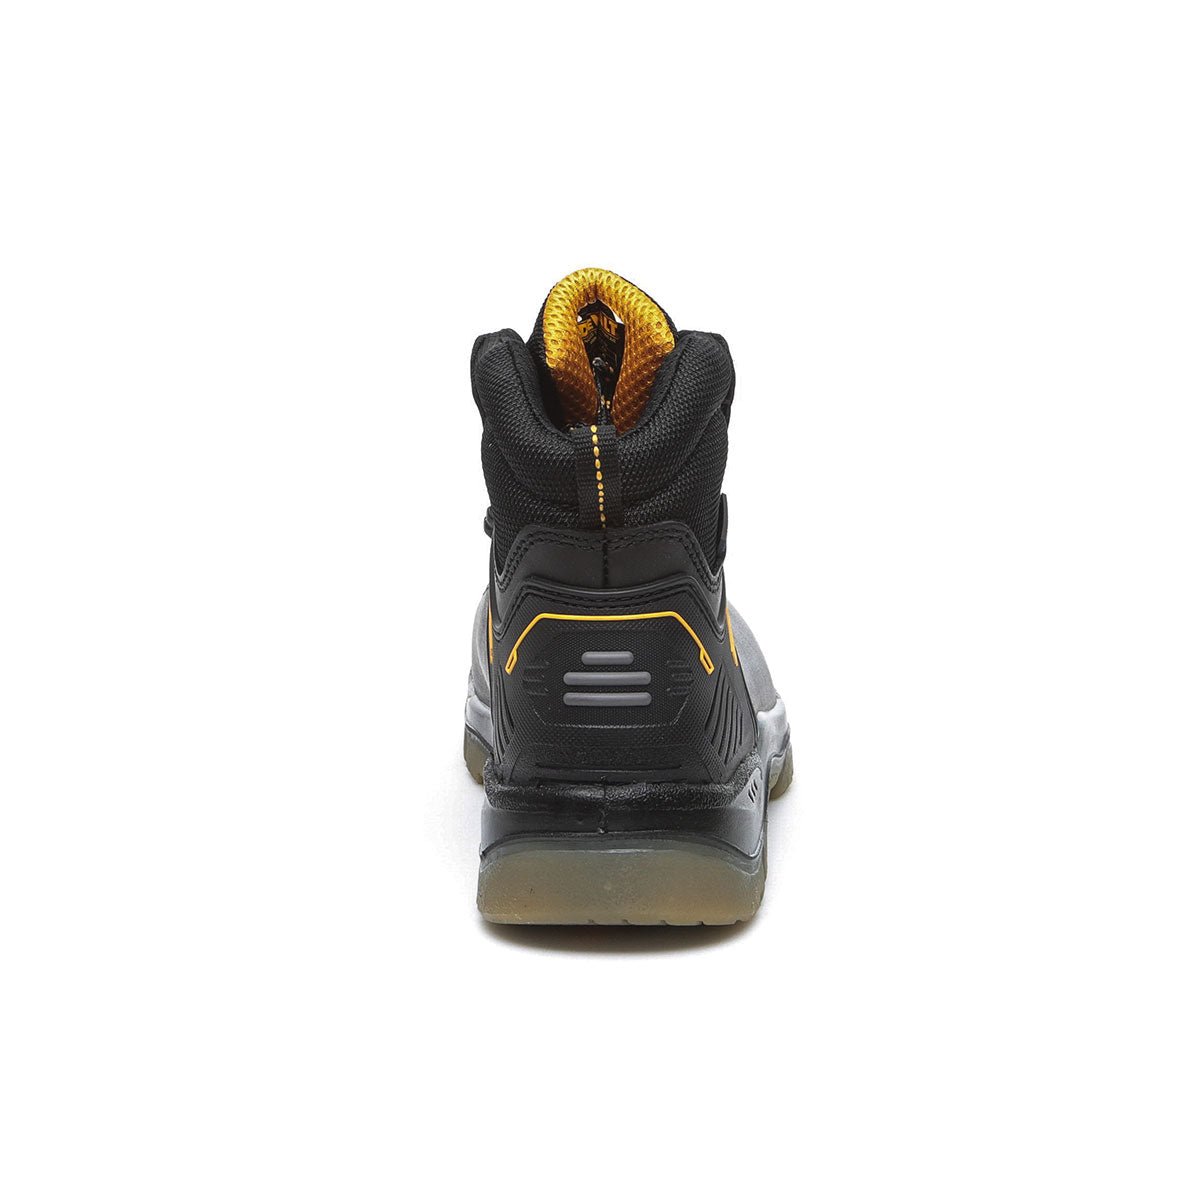 DeWalt Newark Waterproof Safety Hiker Boots - Black - Shoe Store Direct